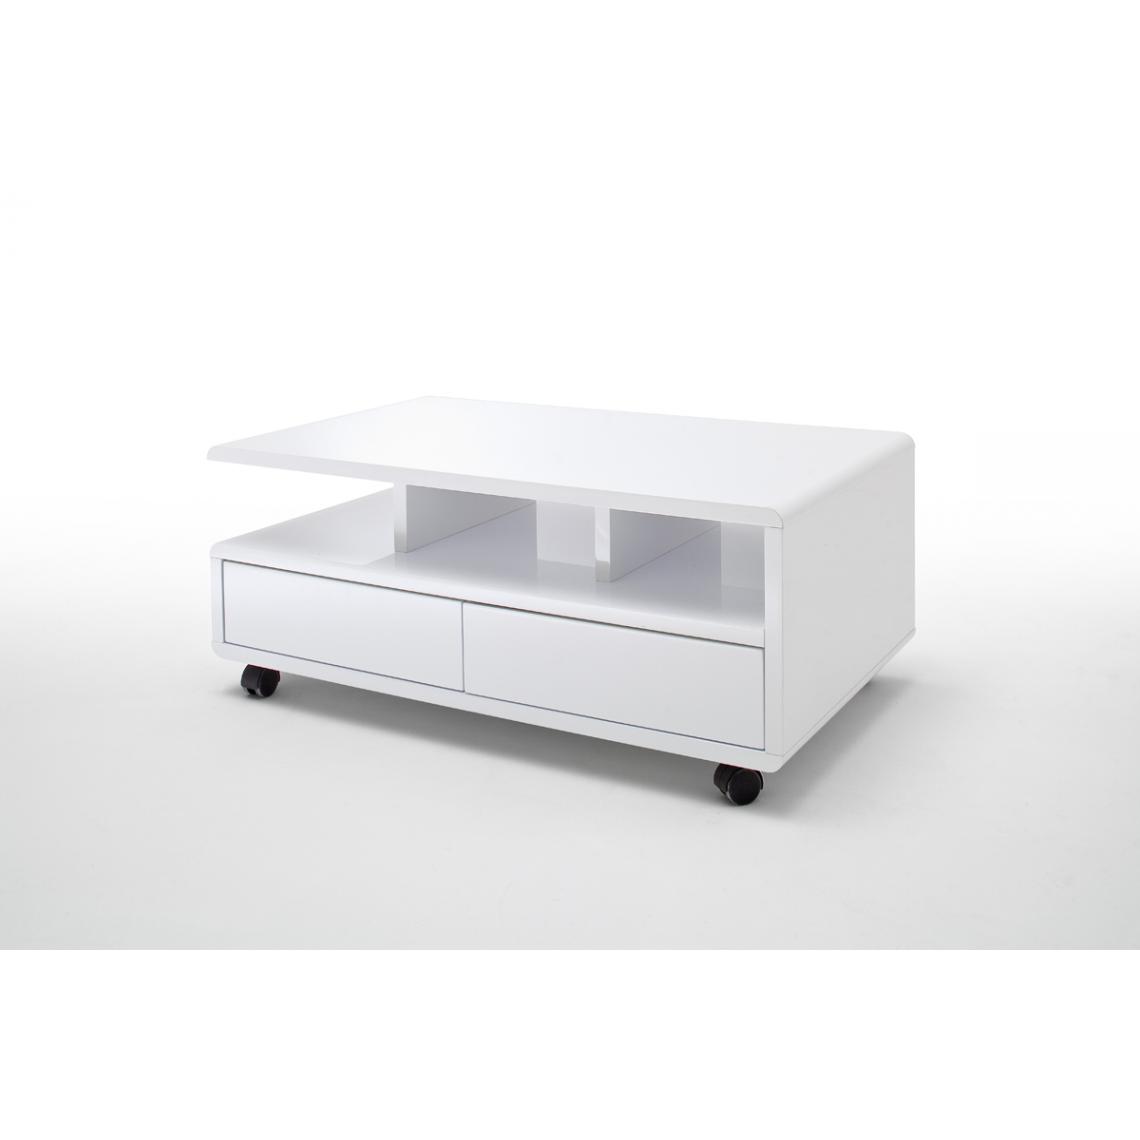 Pegane - Table basse avec 2 tiroirs en blanc laqué brillant - L100 x H41 x P60 cm -PEGANE- - Tables basses